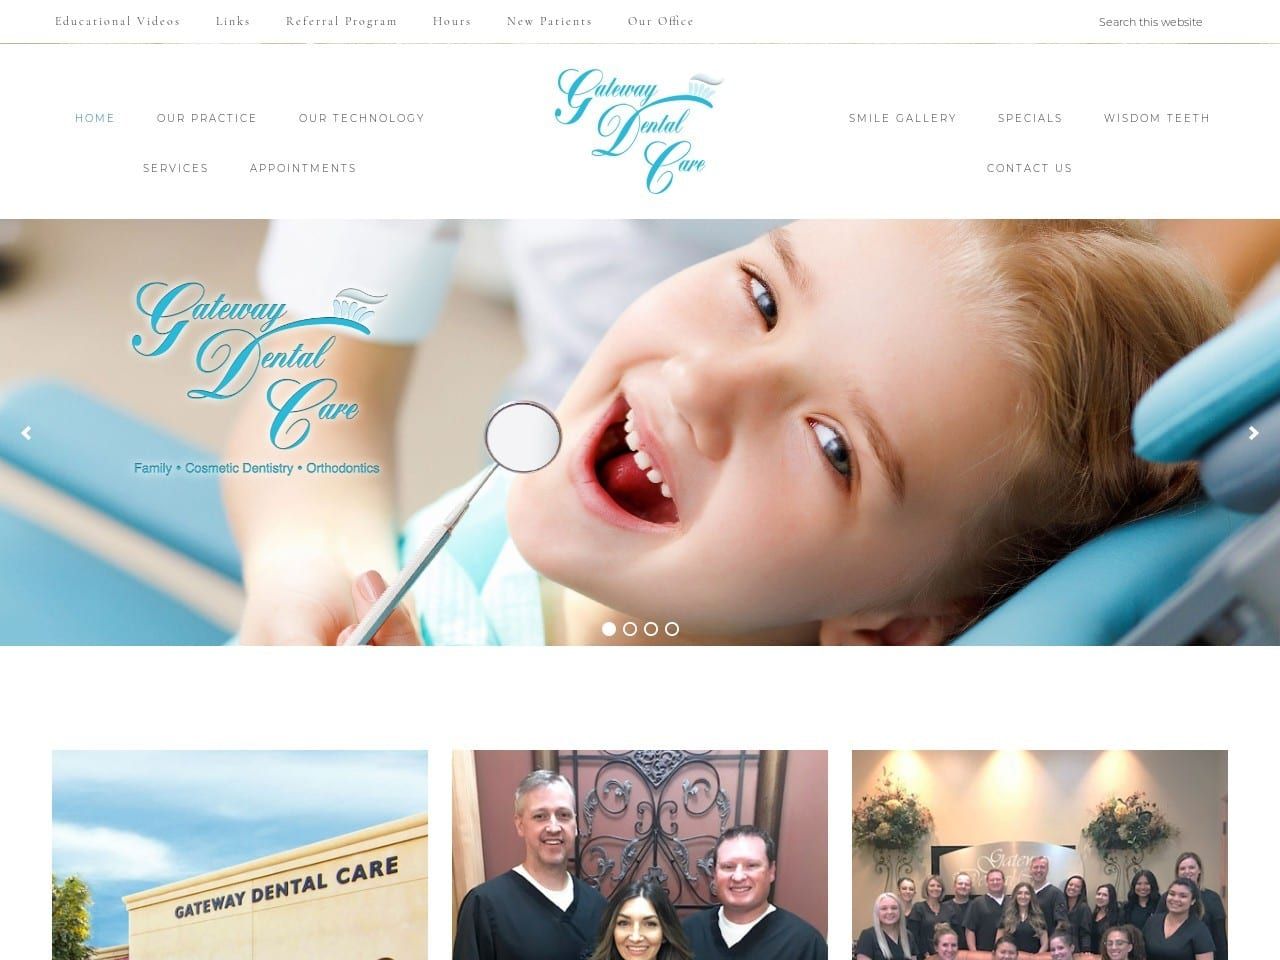 Gateway Dental Care Website Screenshot from gatewaydentalcare.net